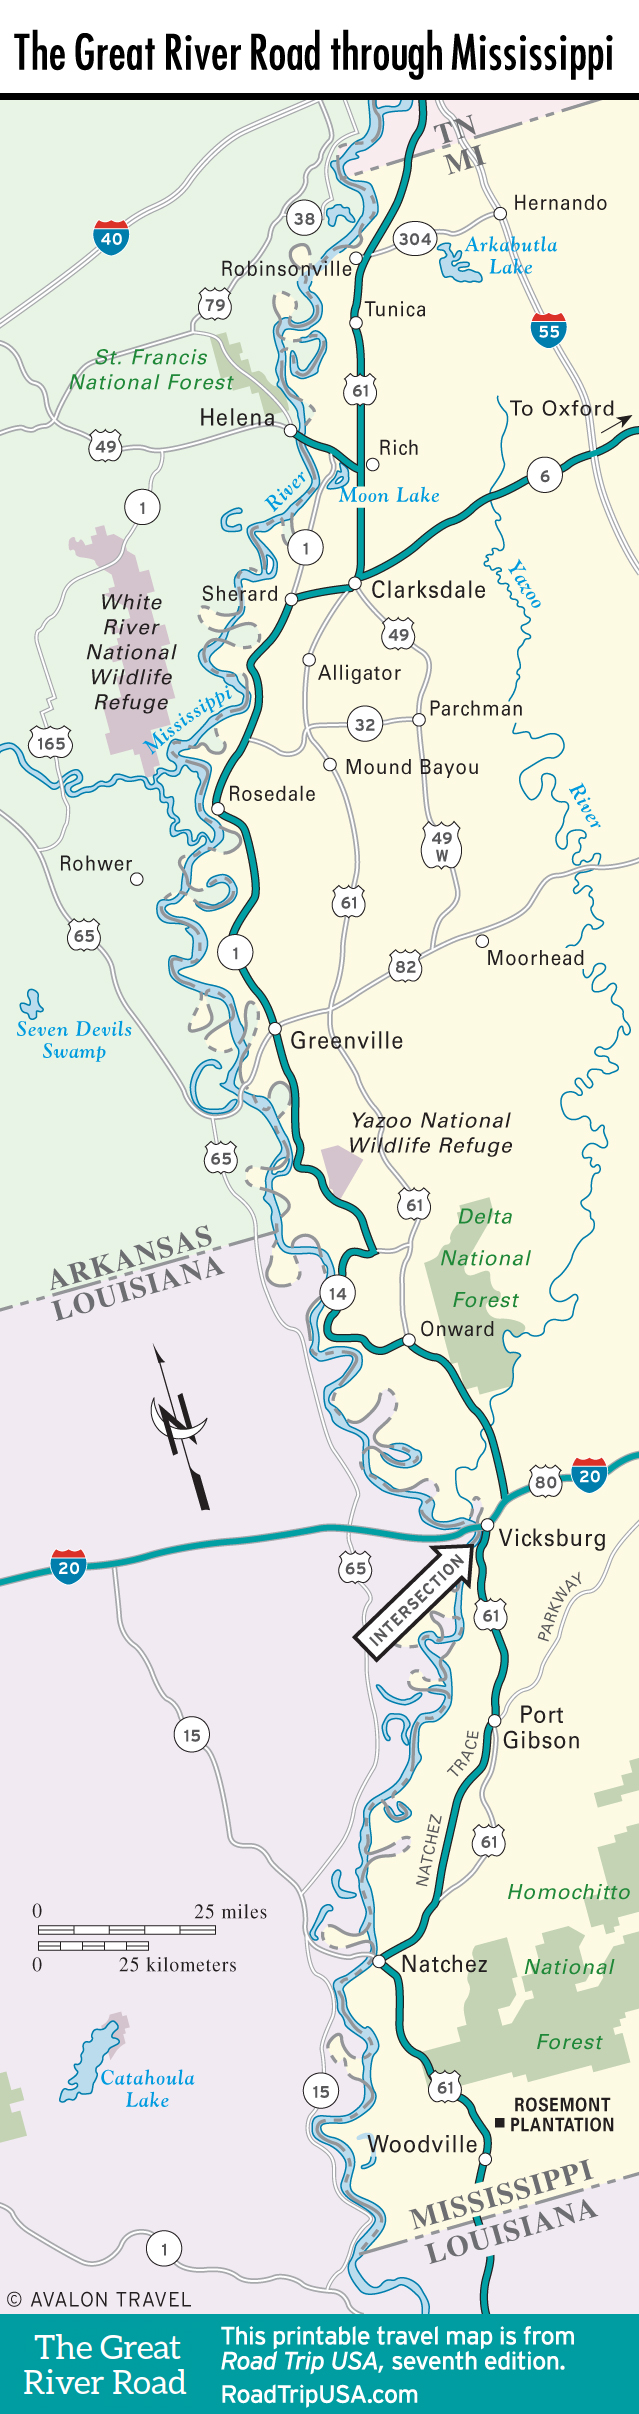 louisiana river road route map